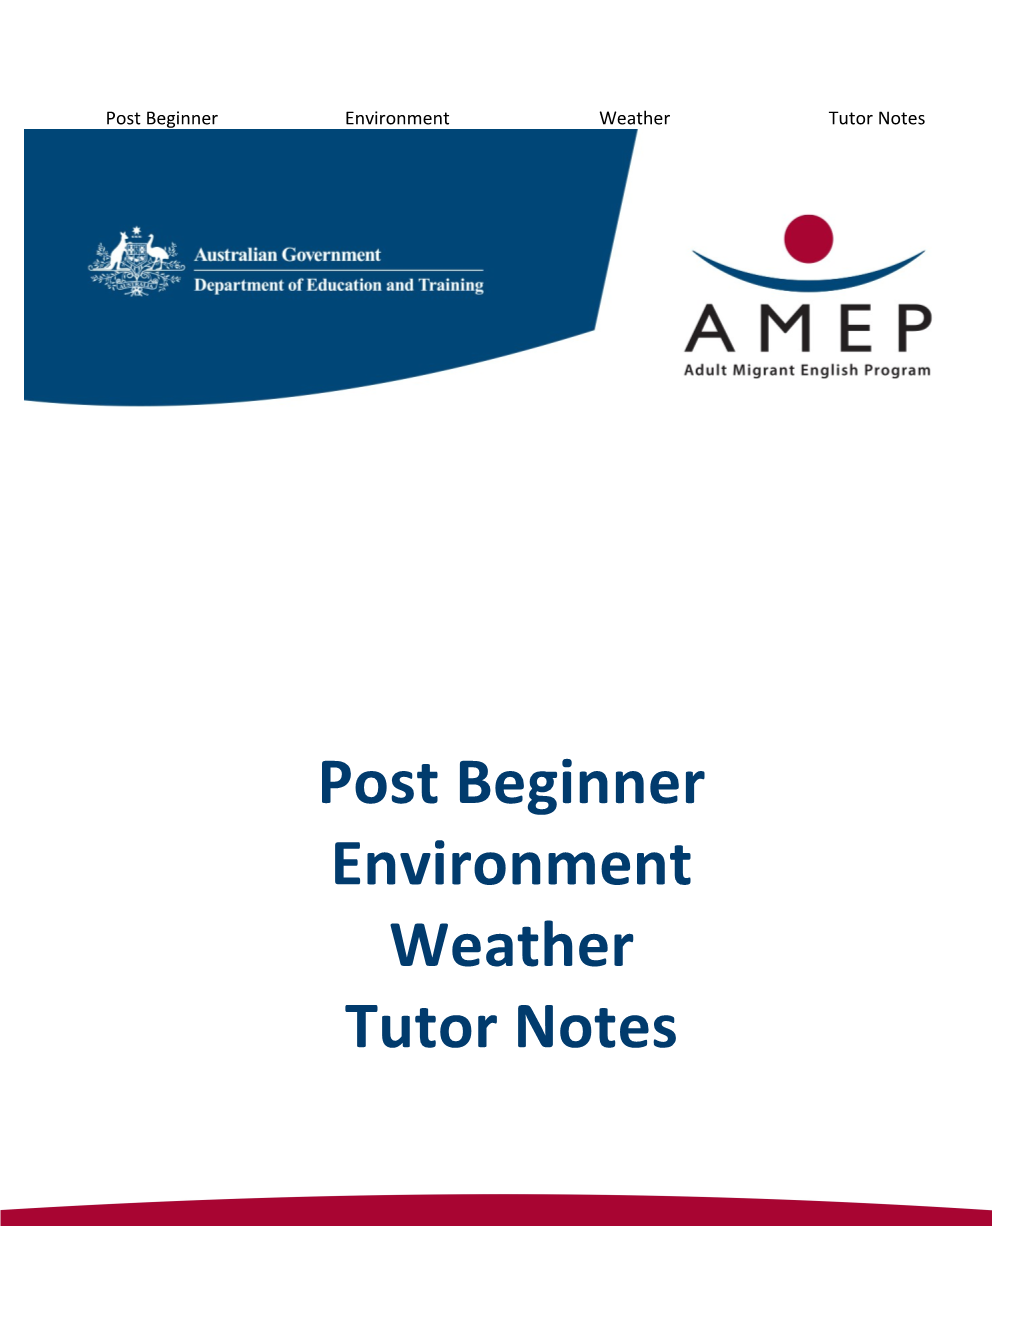 Post Beginner Environment Weather Tutor Notes